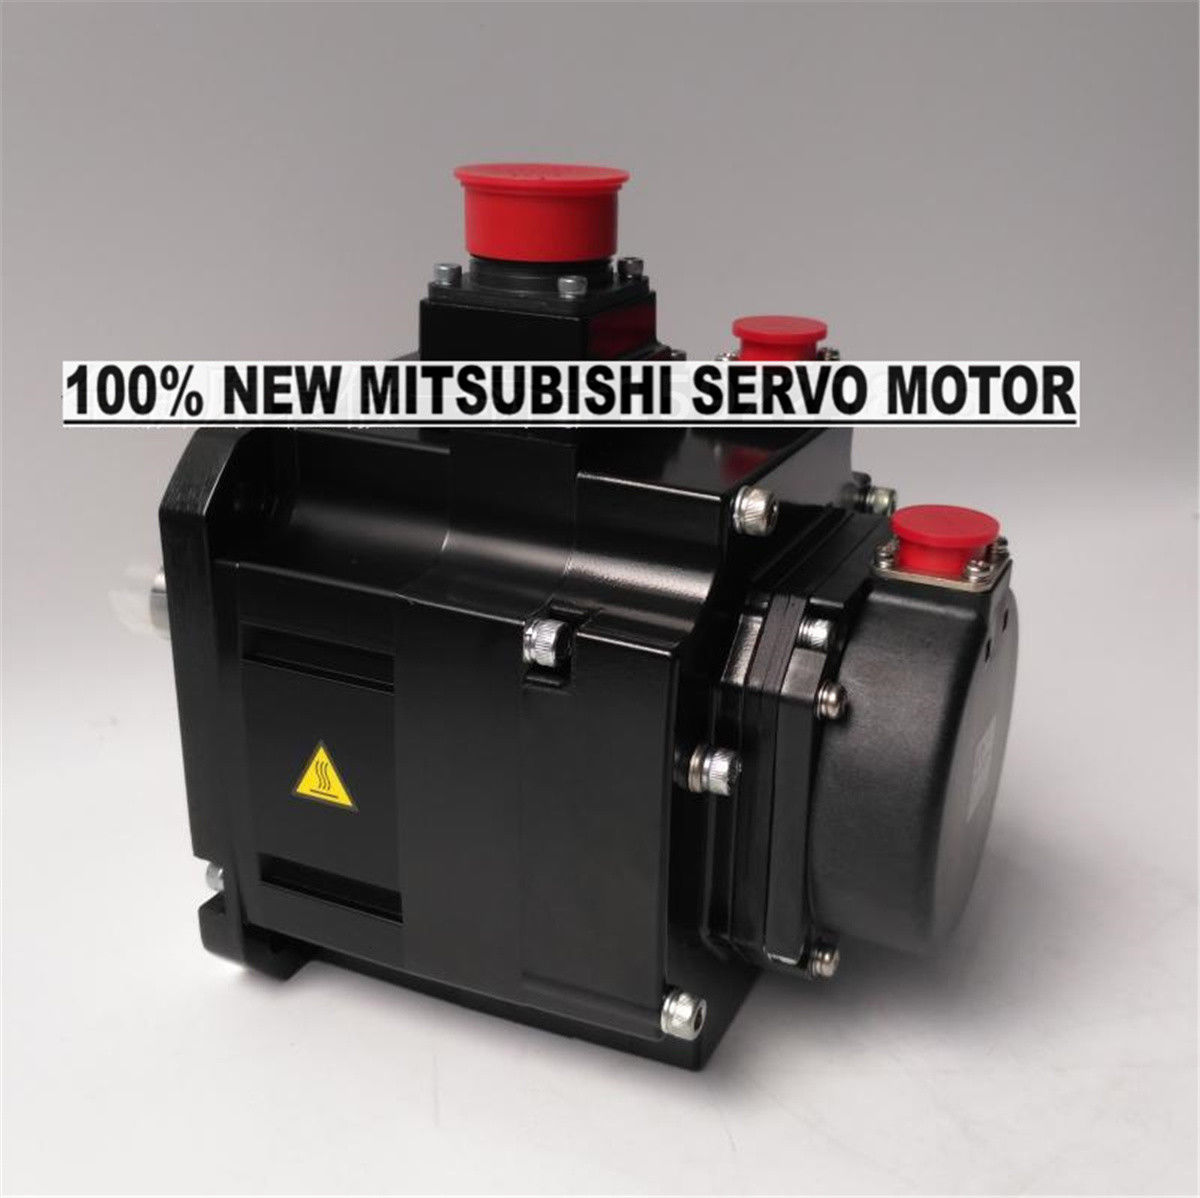 NEW Mitsubishi Servo Motor HF-SP52B in box HFSP52B - Click Image to Close